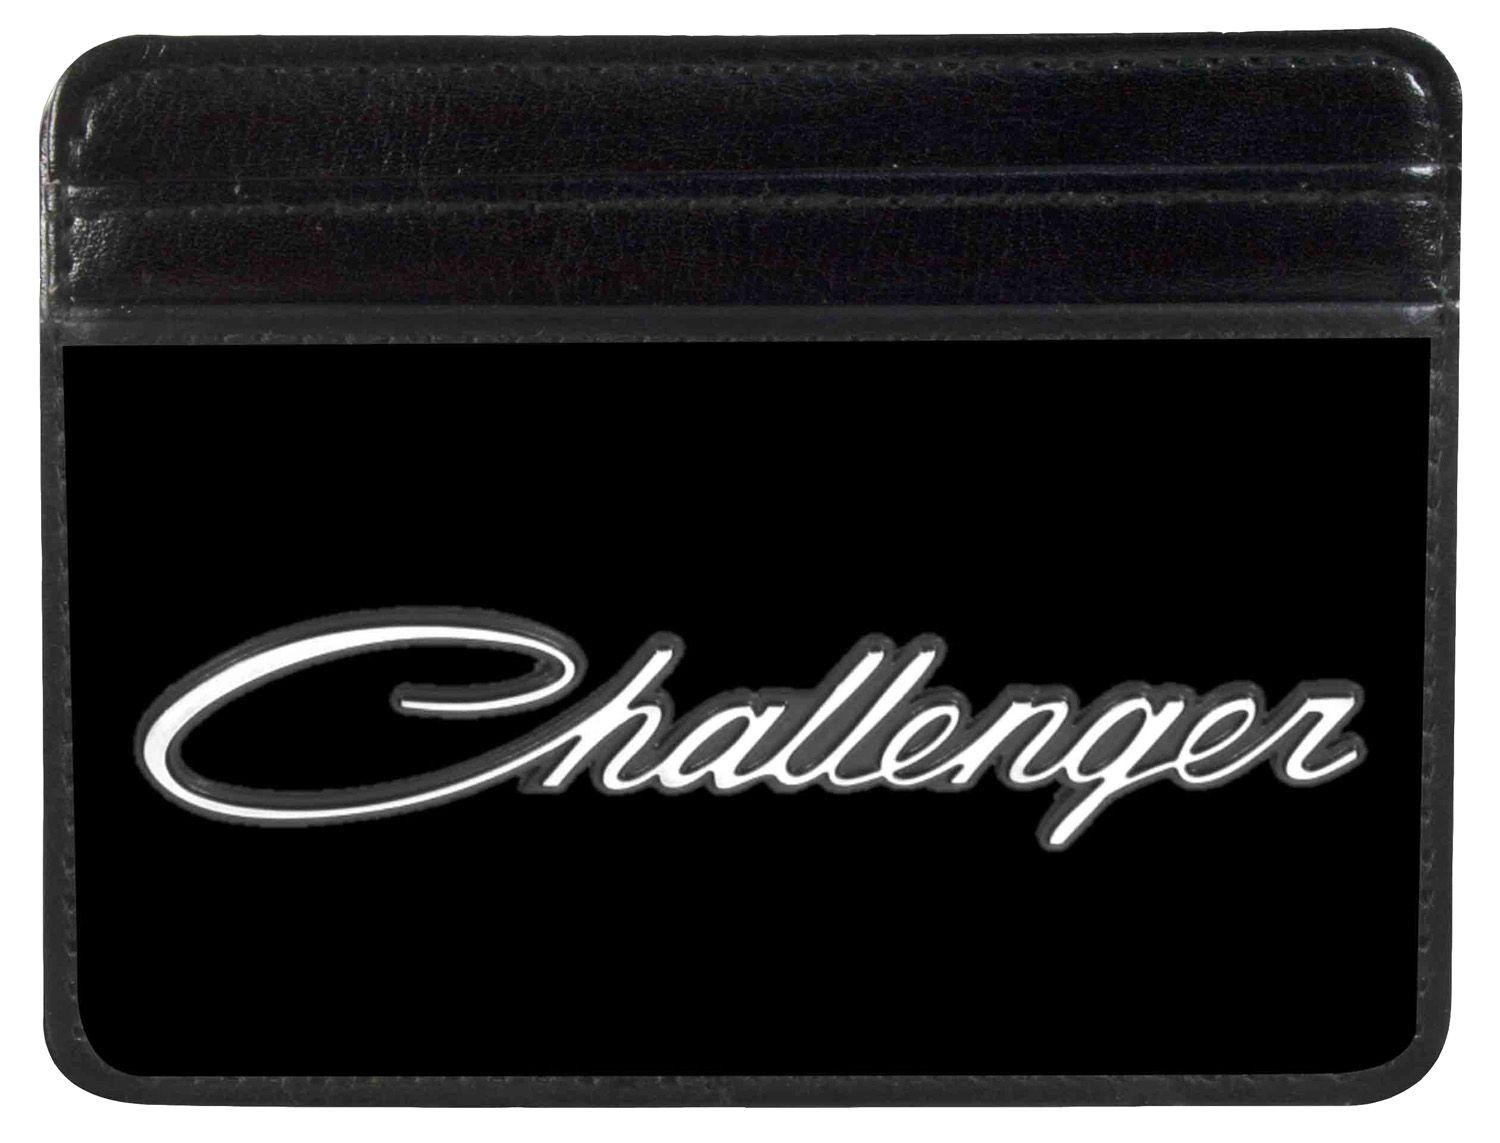 Dodge Car Company Logo - Dodge Automobile Company Cursive Challenger Logo Weekend Wallet ...